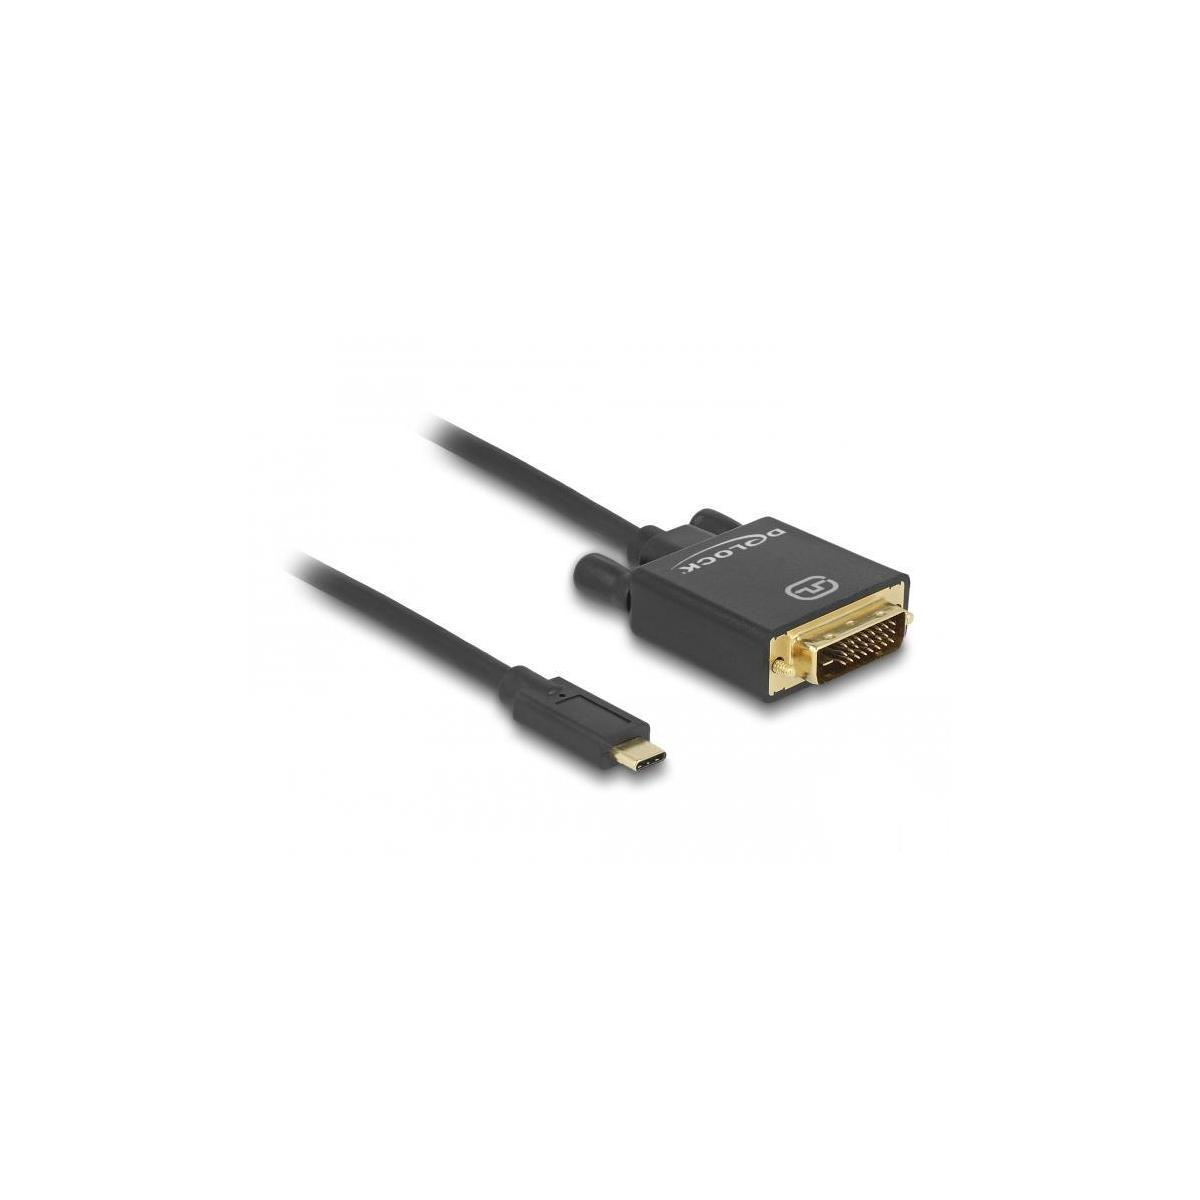 Adapter mehrfarbig Kabel USB USB, 1m. & DeLOCK USB-C/DVI USB adapter graphics USB DELOCK 24+1